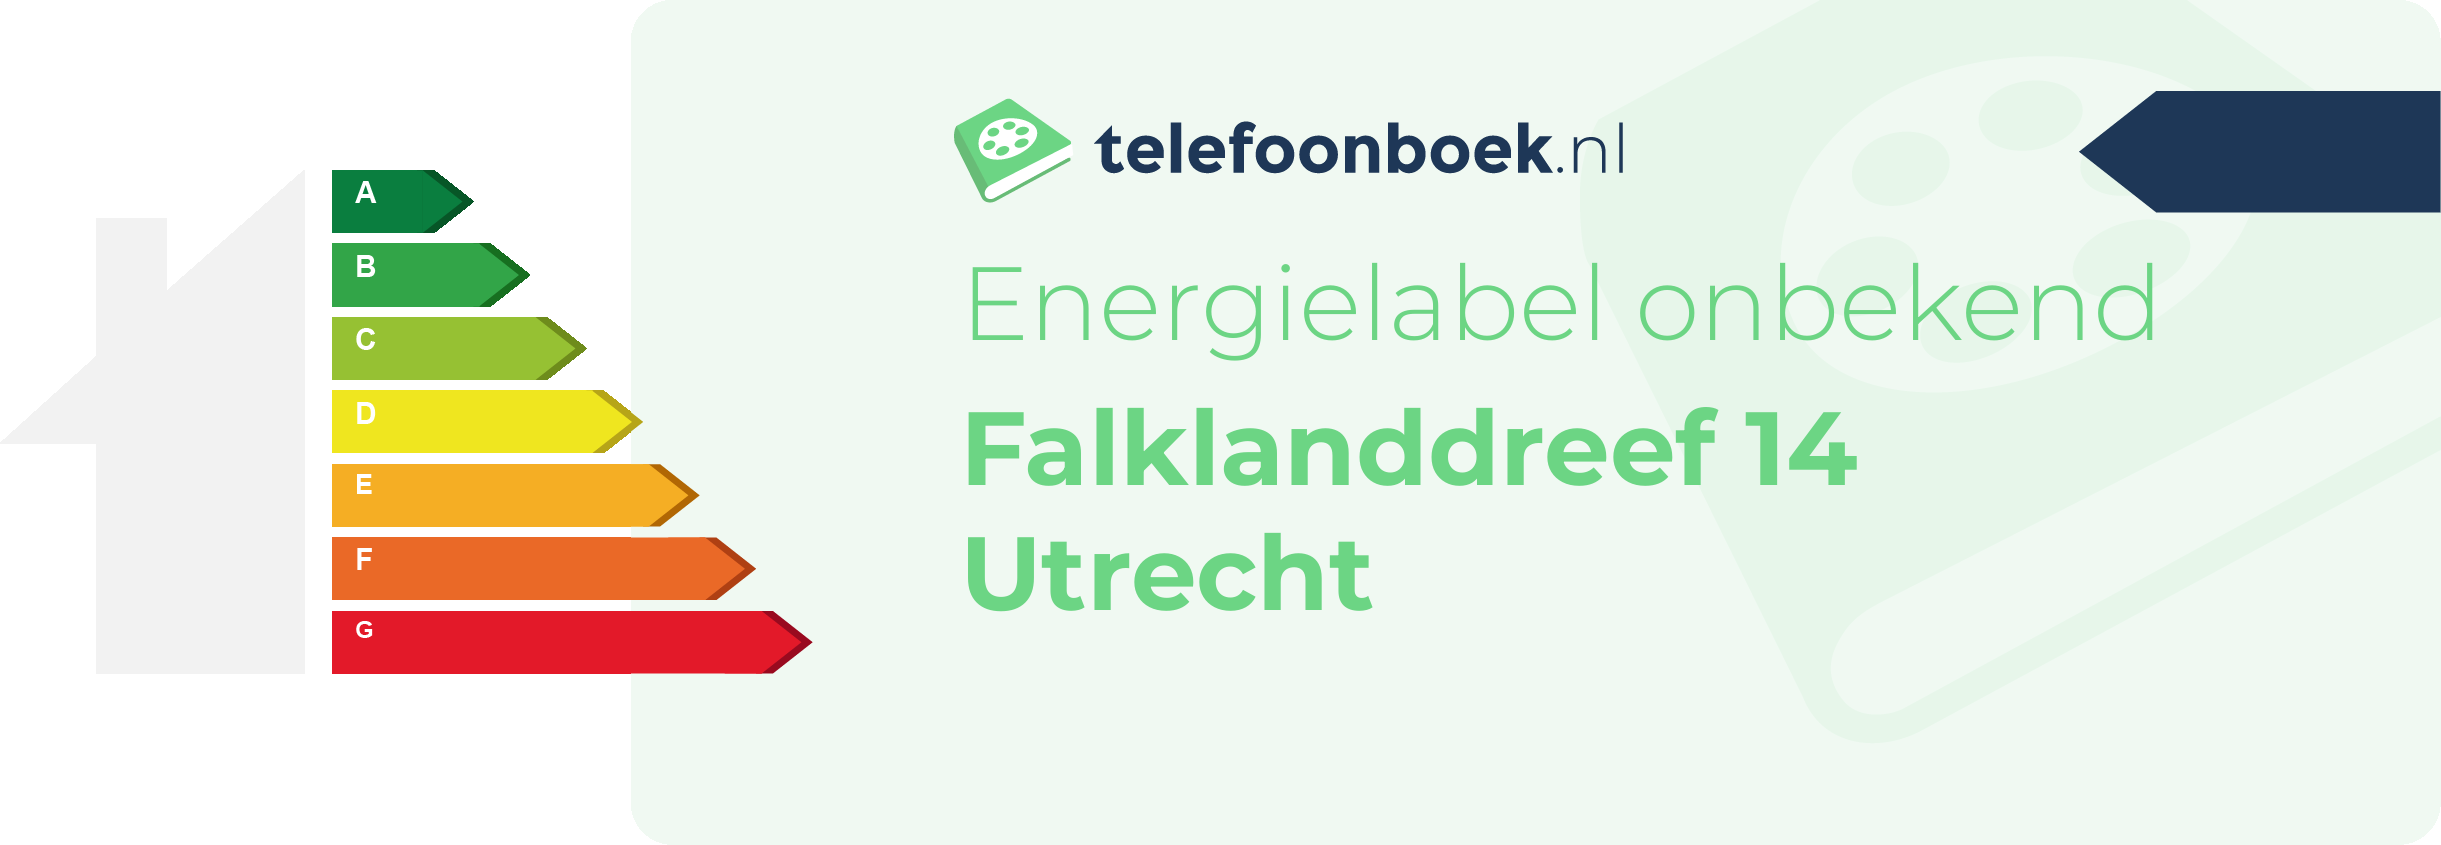 Energielabel Falklanddreef 14 Utrecht